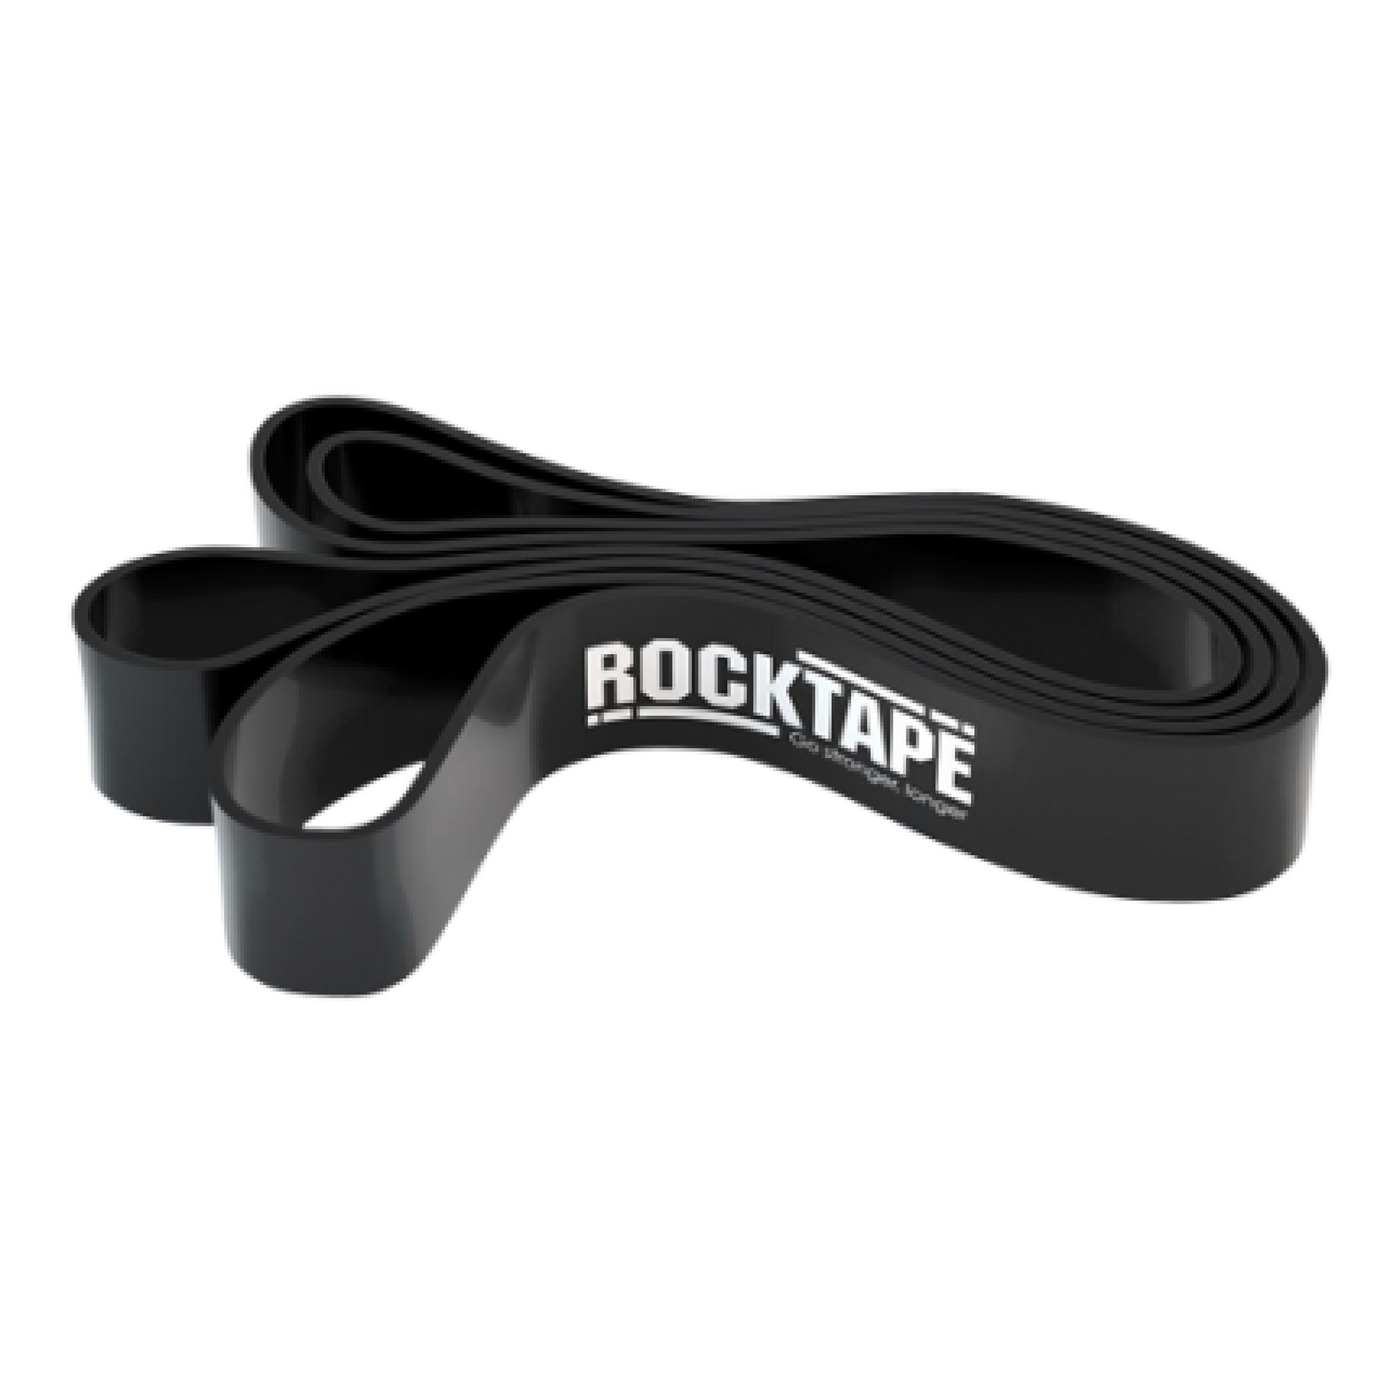 Rockband Black Medium - product only